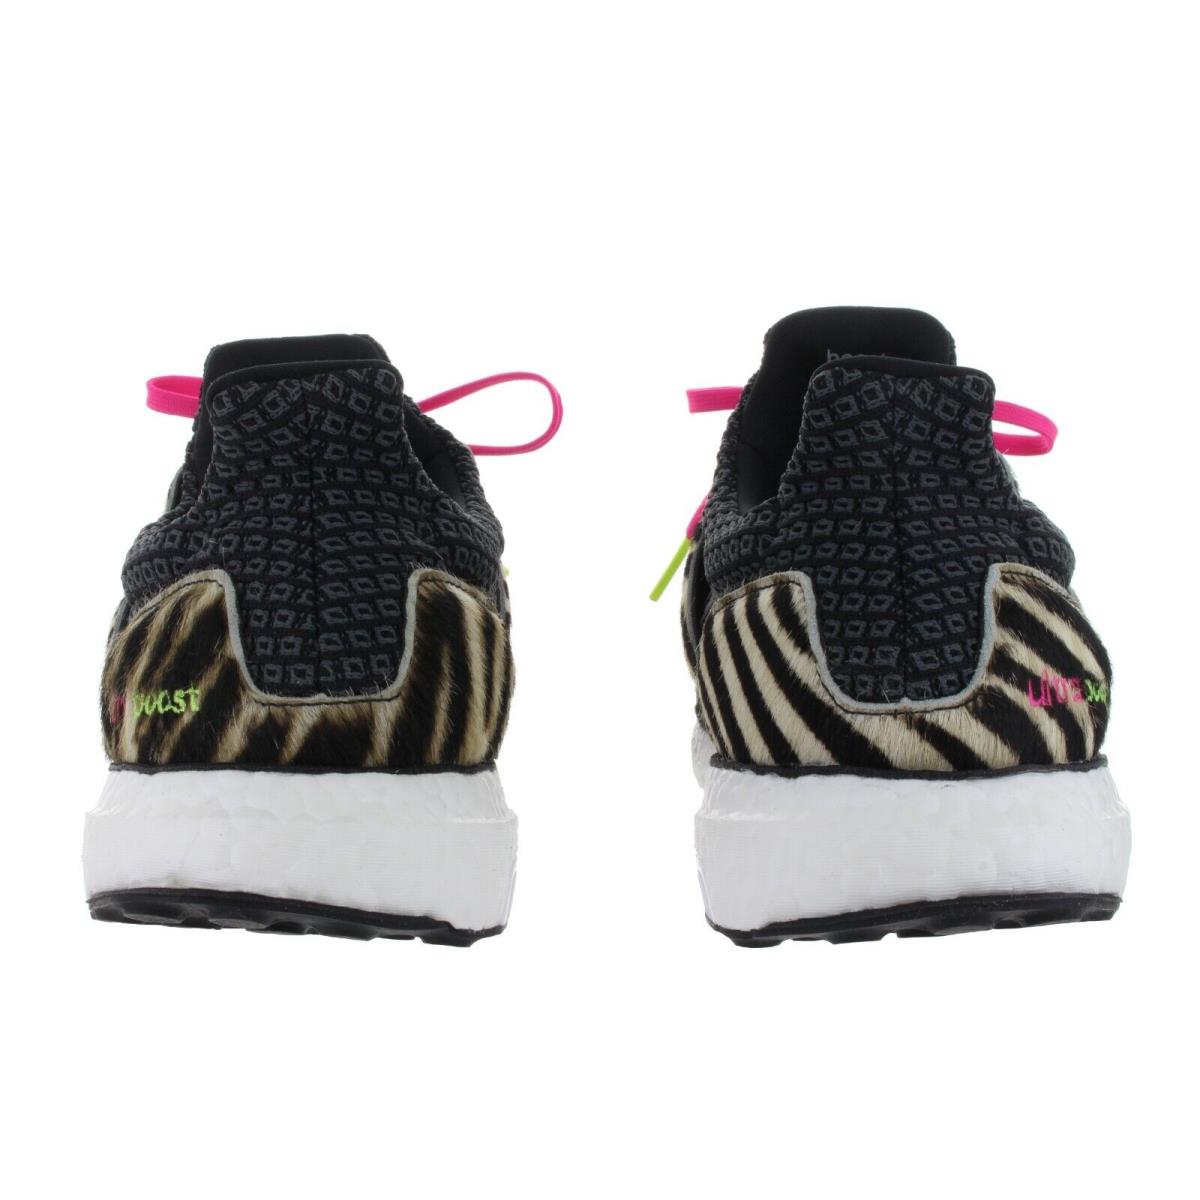 Adidas shoes UltraBoost DNA Zebra - Core Black, Cloud White, Shock Pink 2